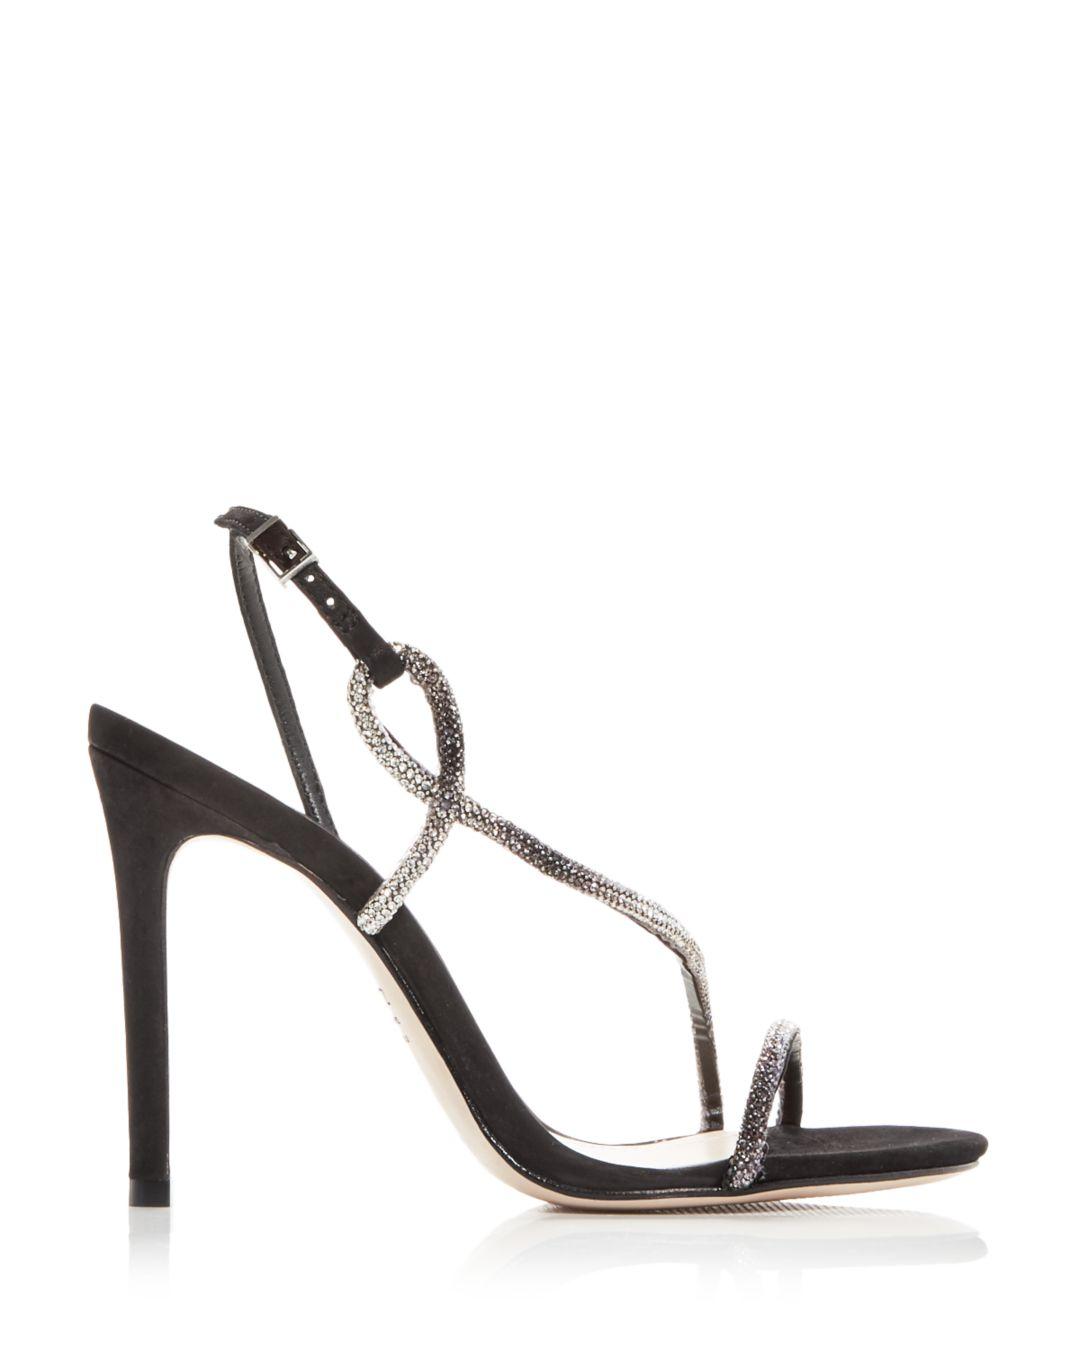 SCHUTZ SHOES Gaela Embellished High Heel Sandals in Black | Lyst